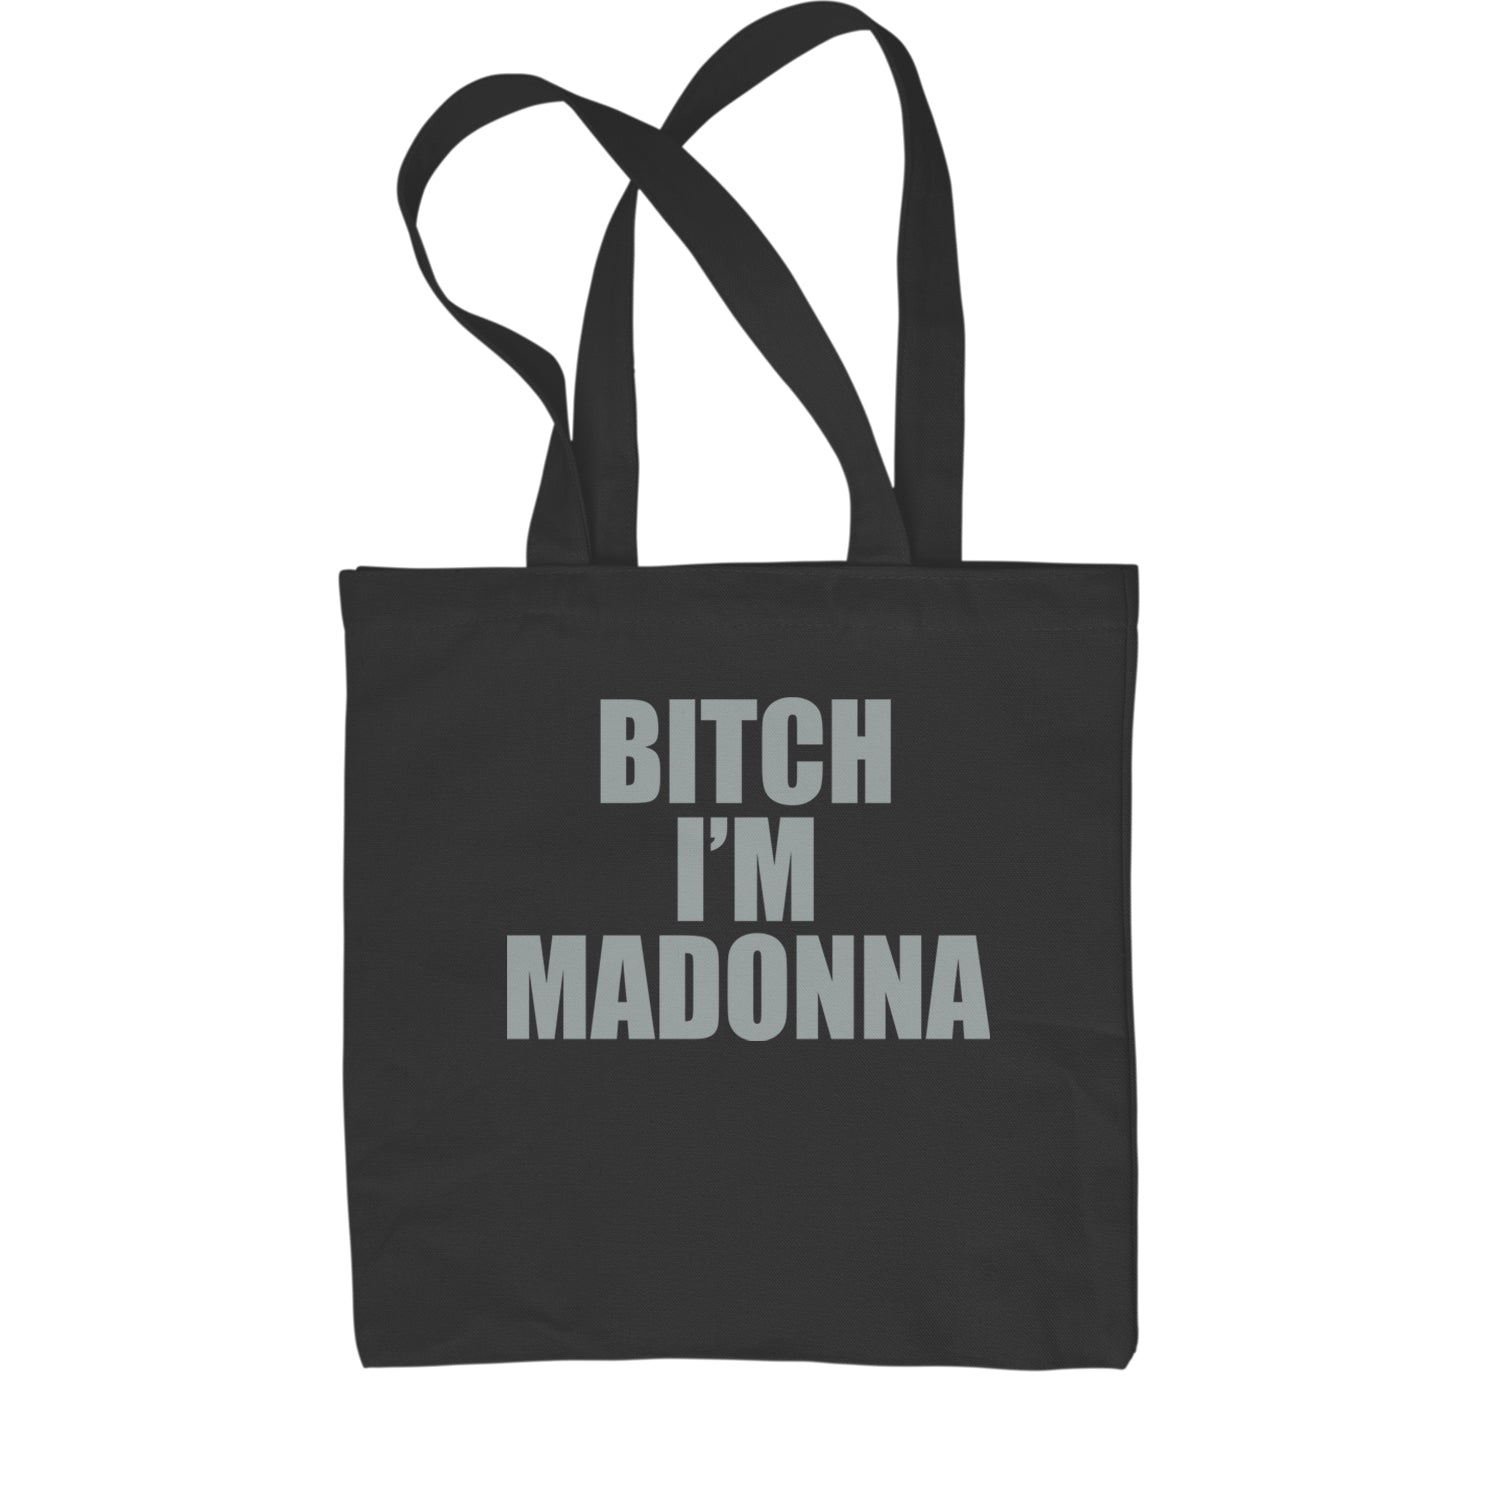 B-tch I'm Madonna Celebration Shopping Tote Bag